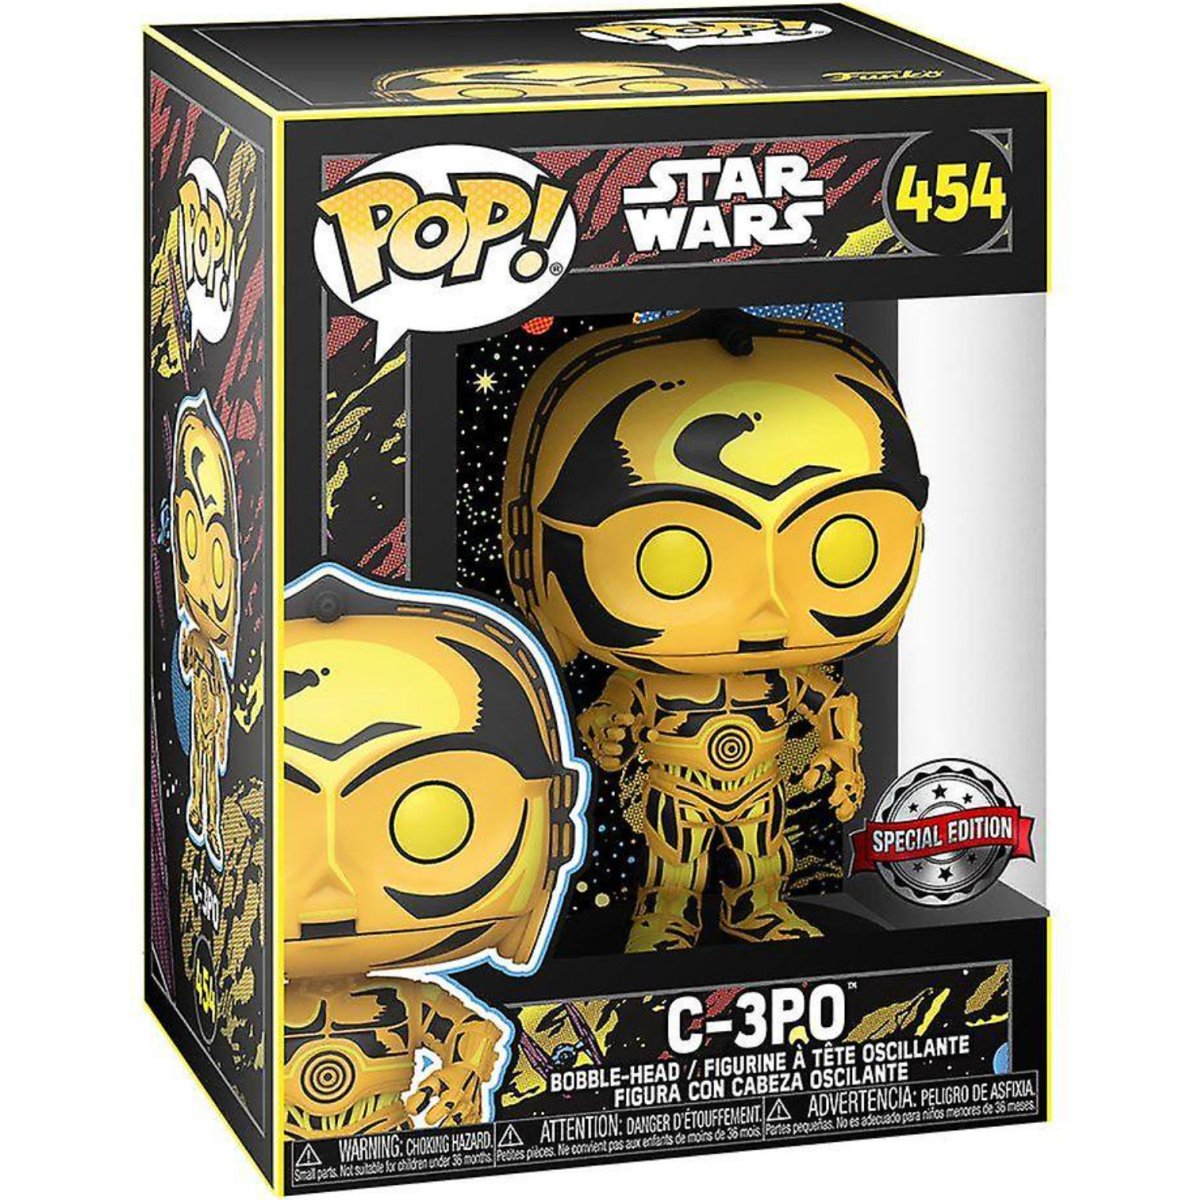 Star Wars - C-3PO [Retro Series] (Special Edition) #454 - Funko Pop! Vinyl Star Wars - Persona Toys